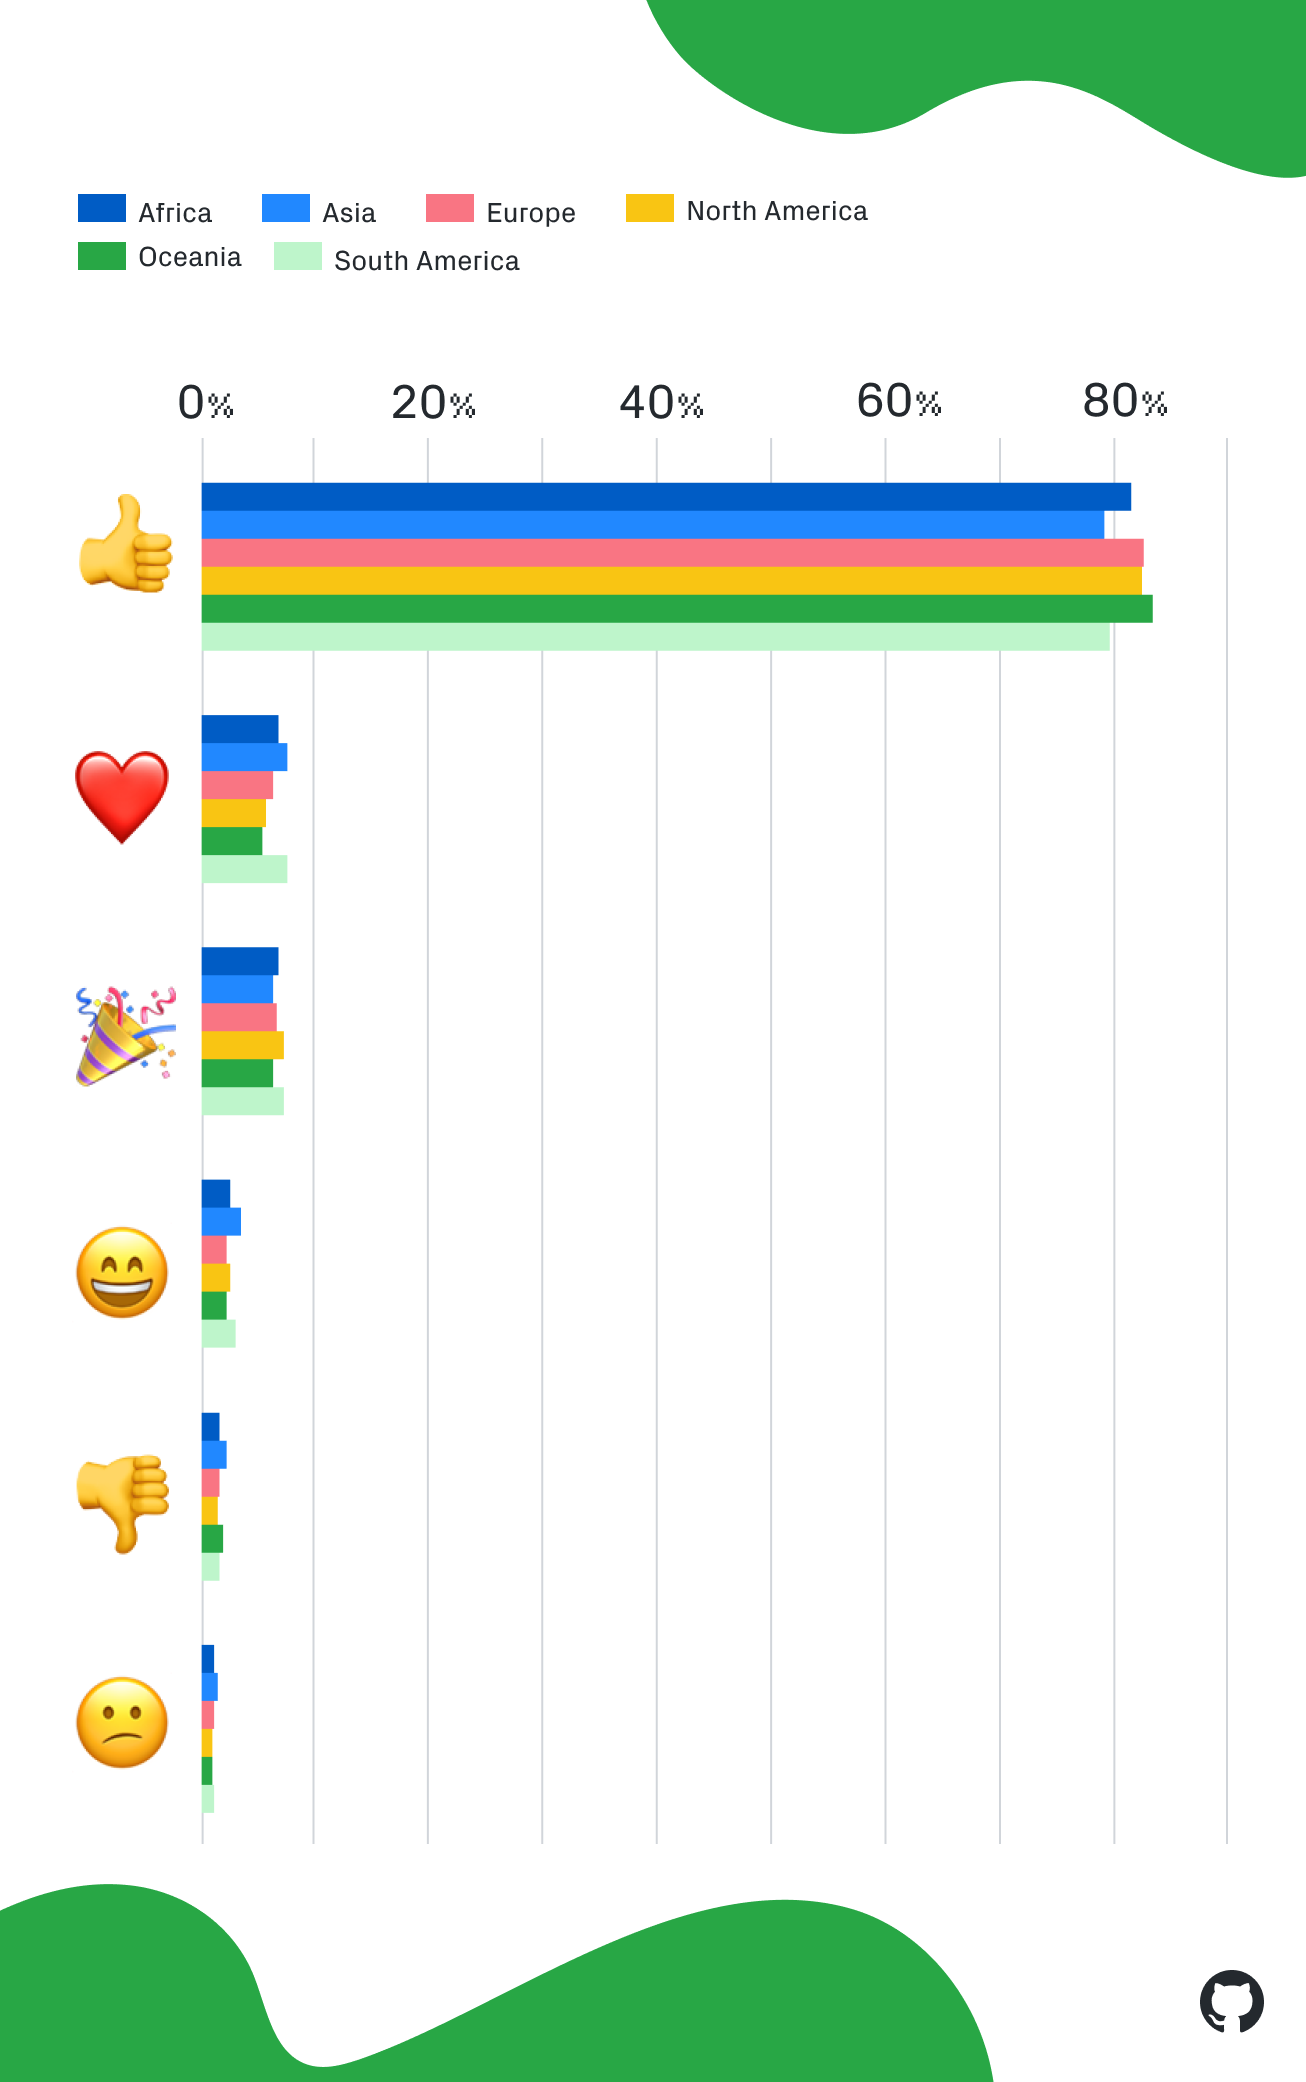 Emoji usage by continent